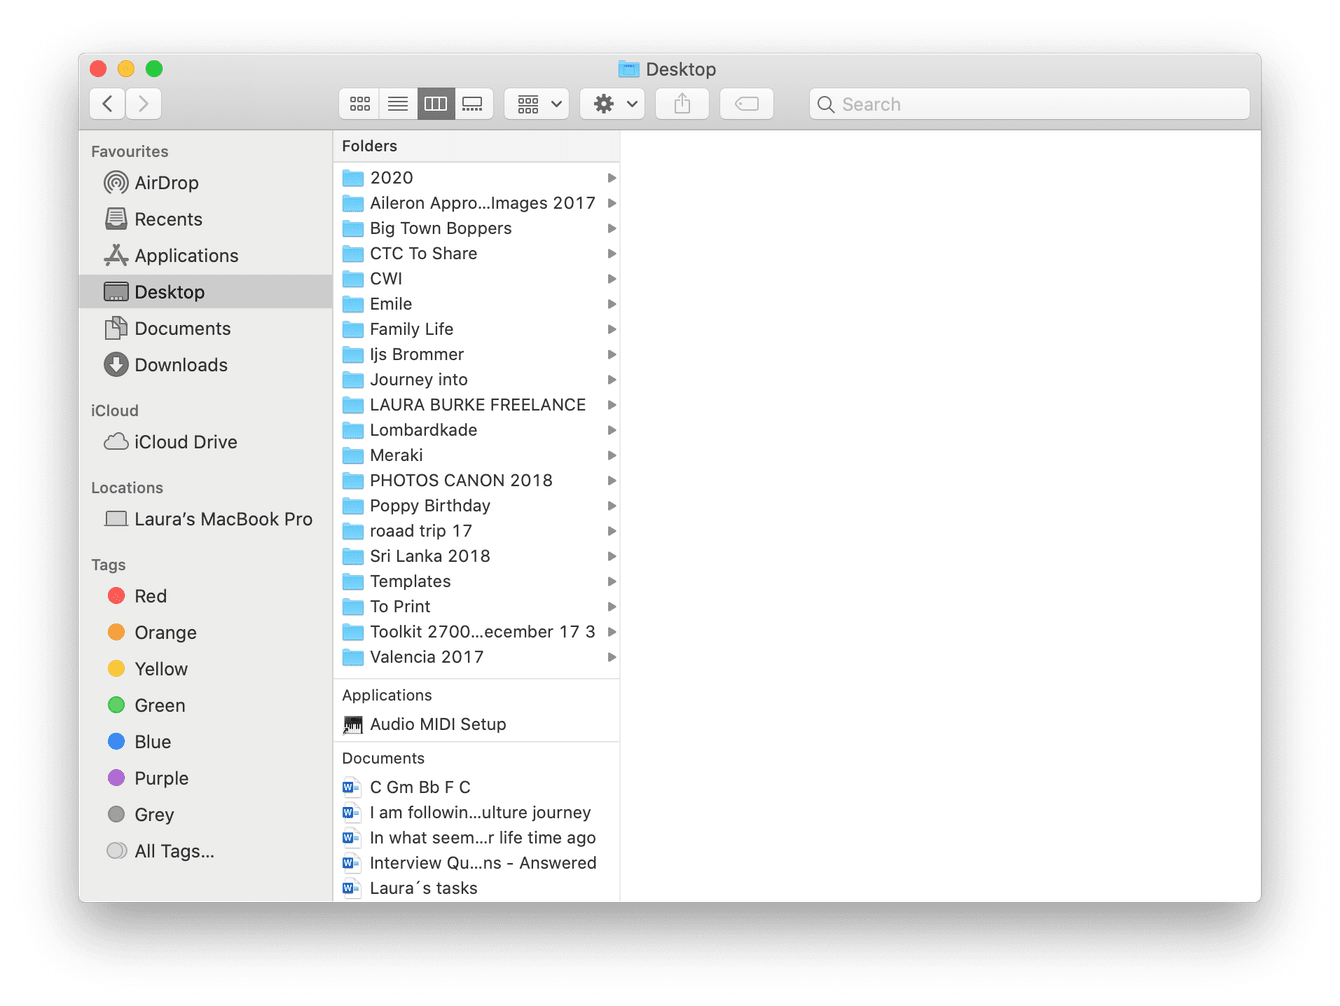 Files on desktop